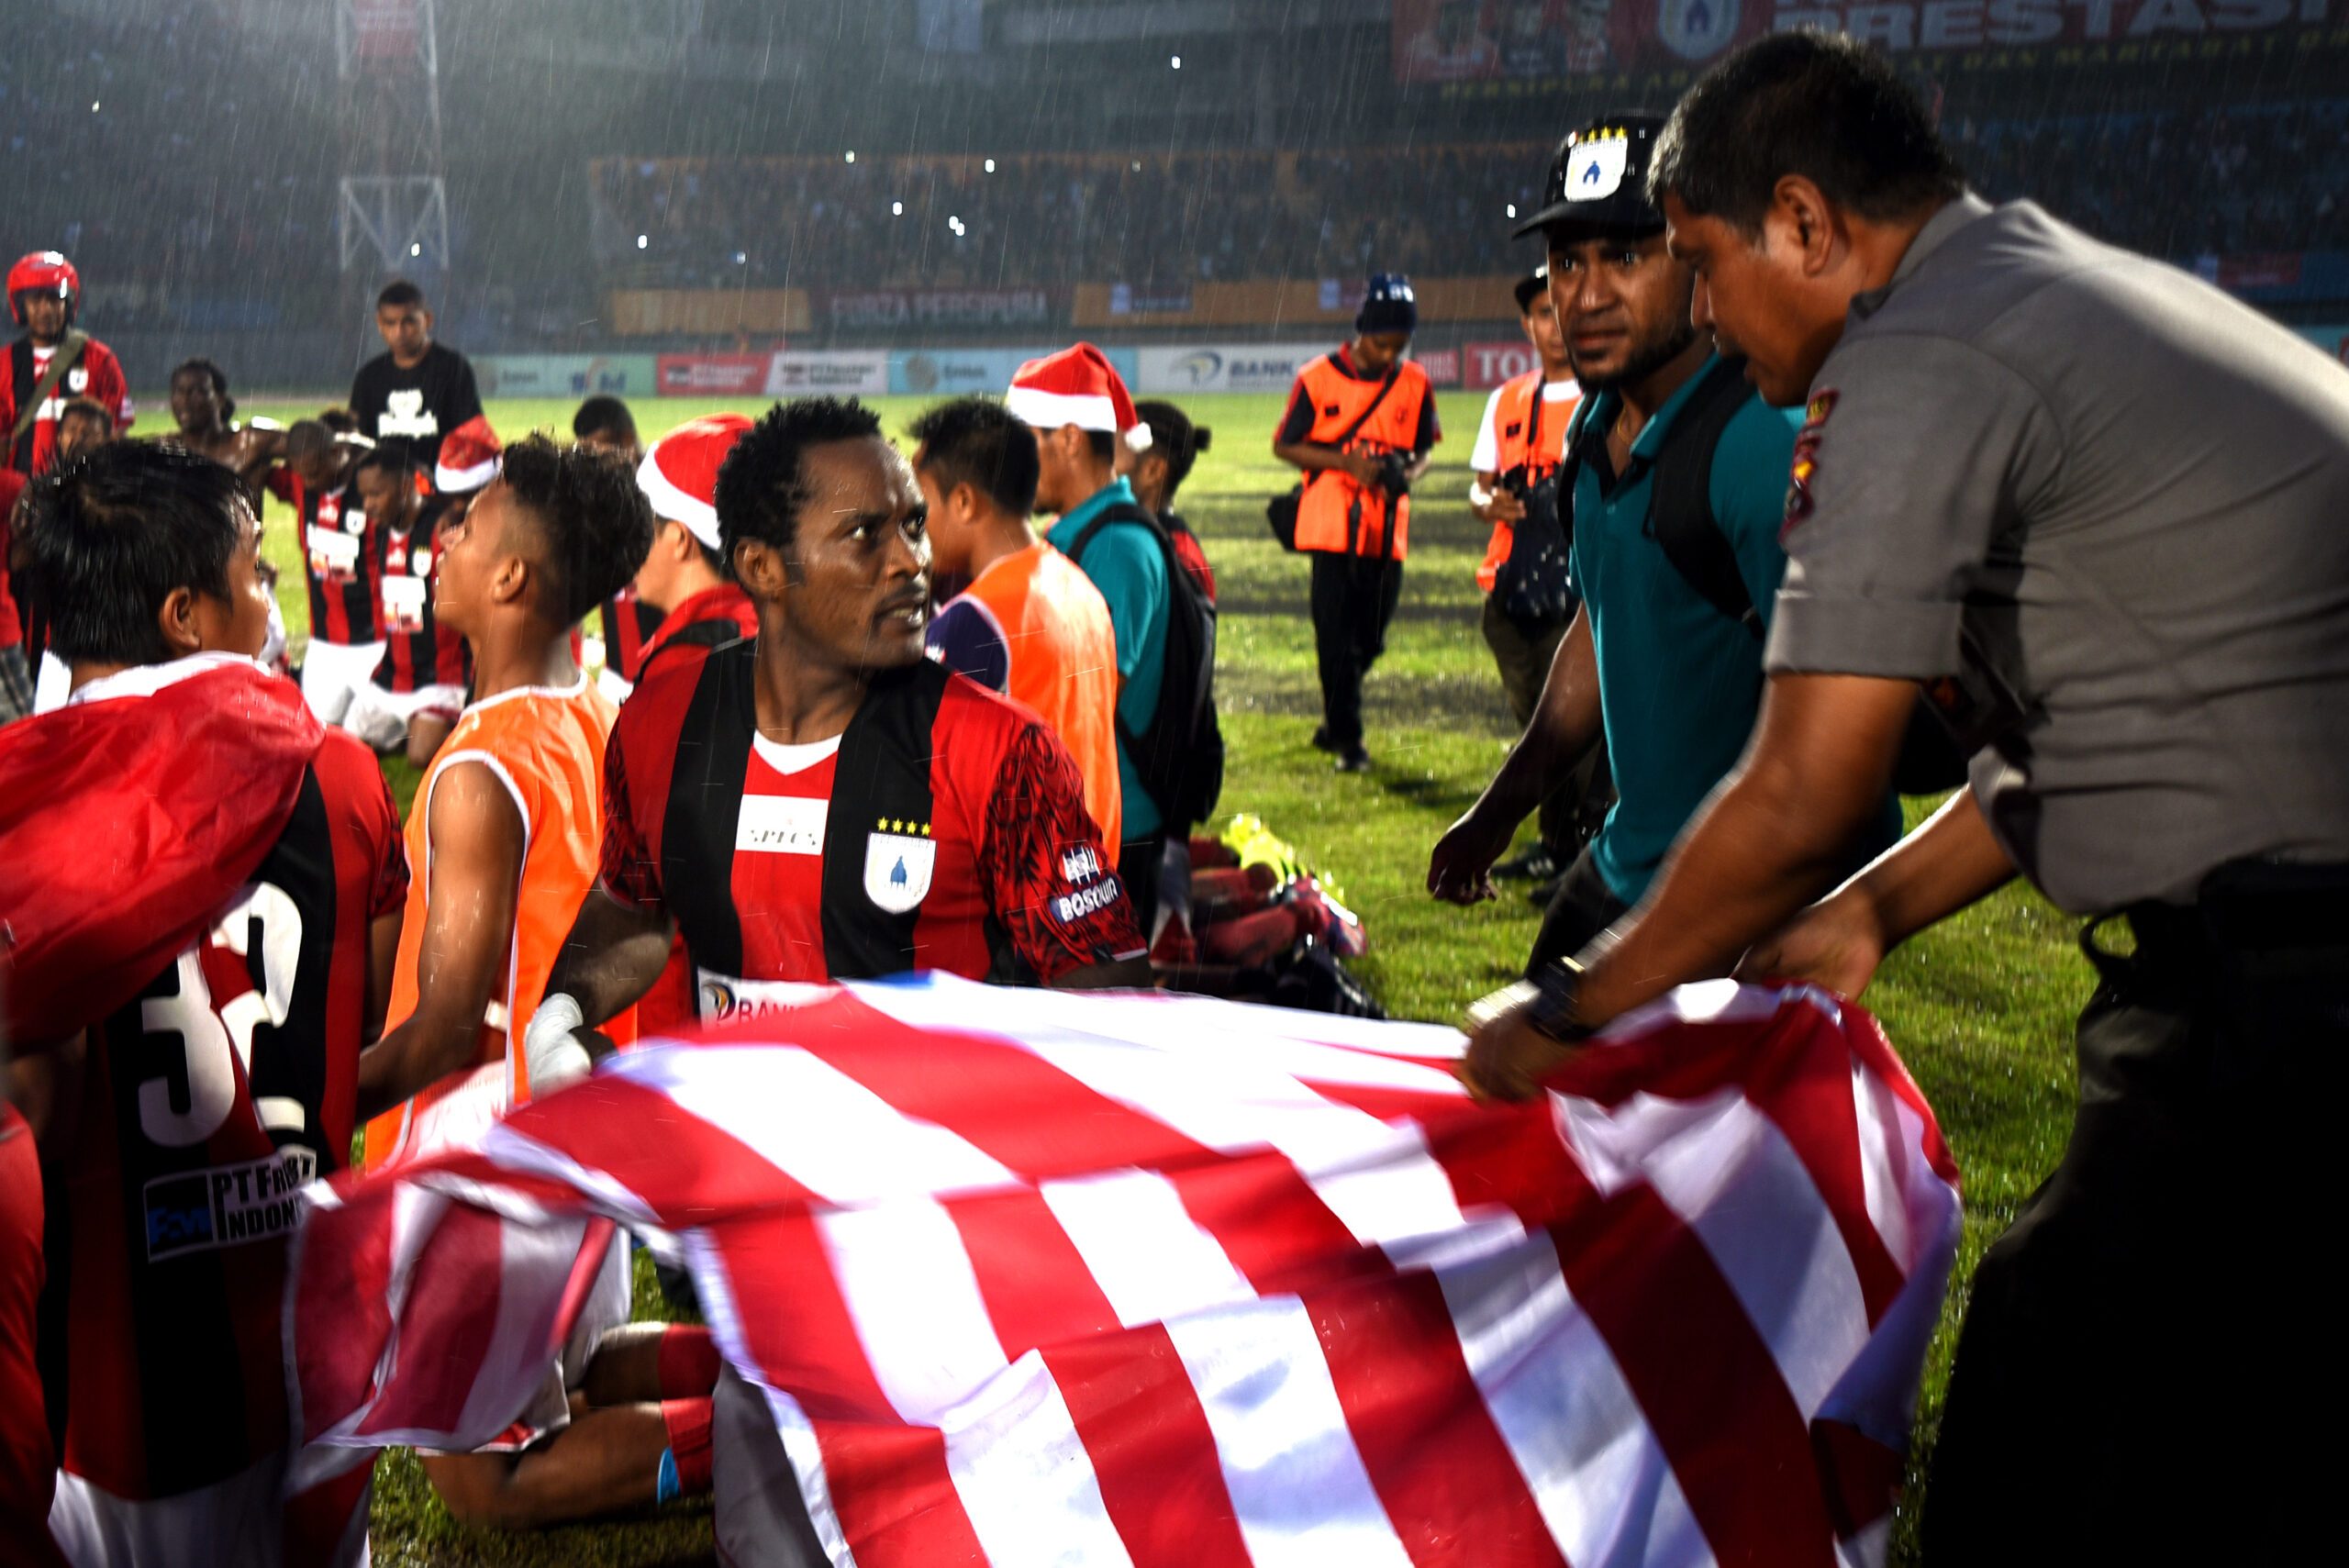 Pemain asing Persipura kibarkan bendera Liberia, aparat sempat ketar-ketir